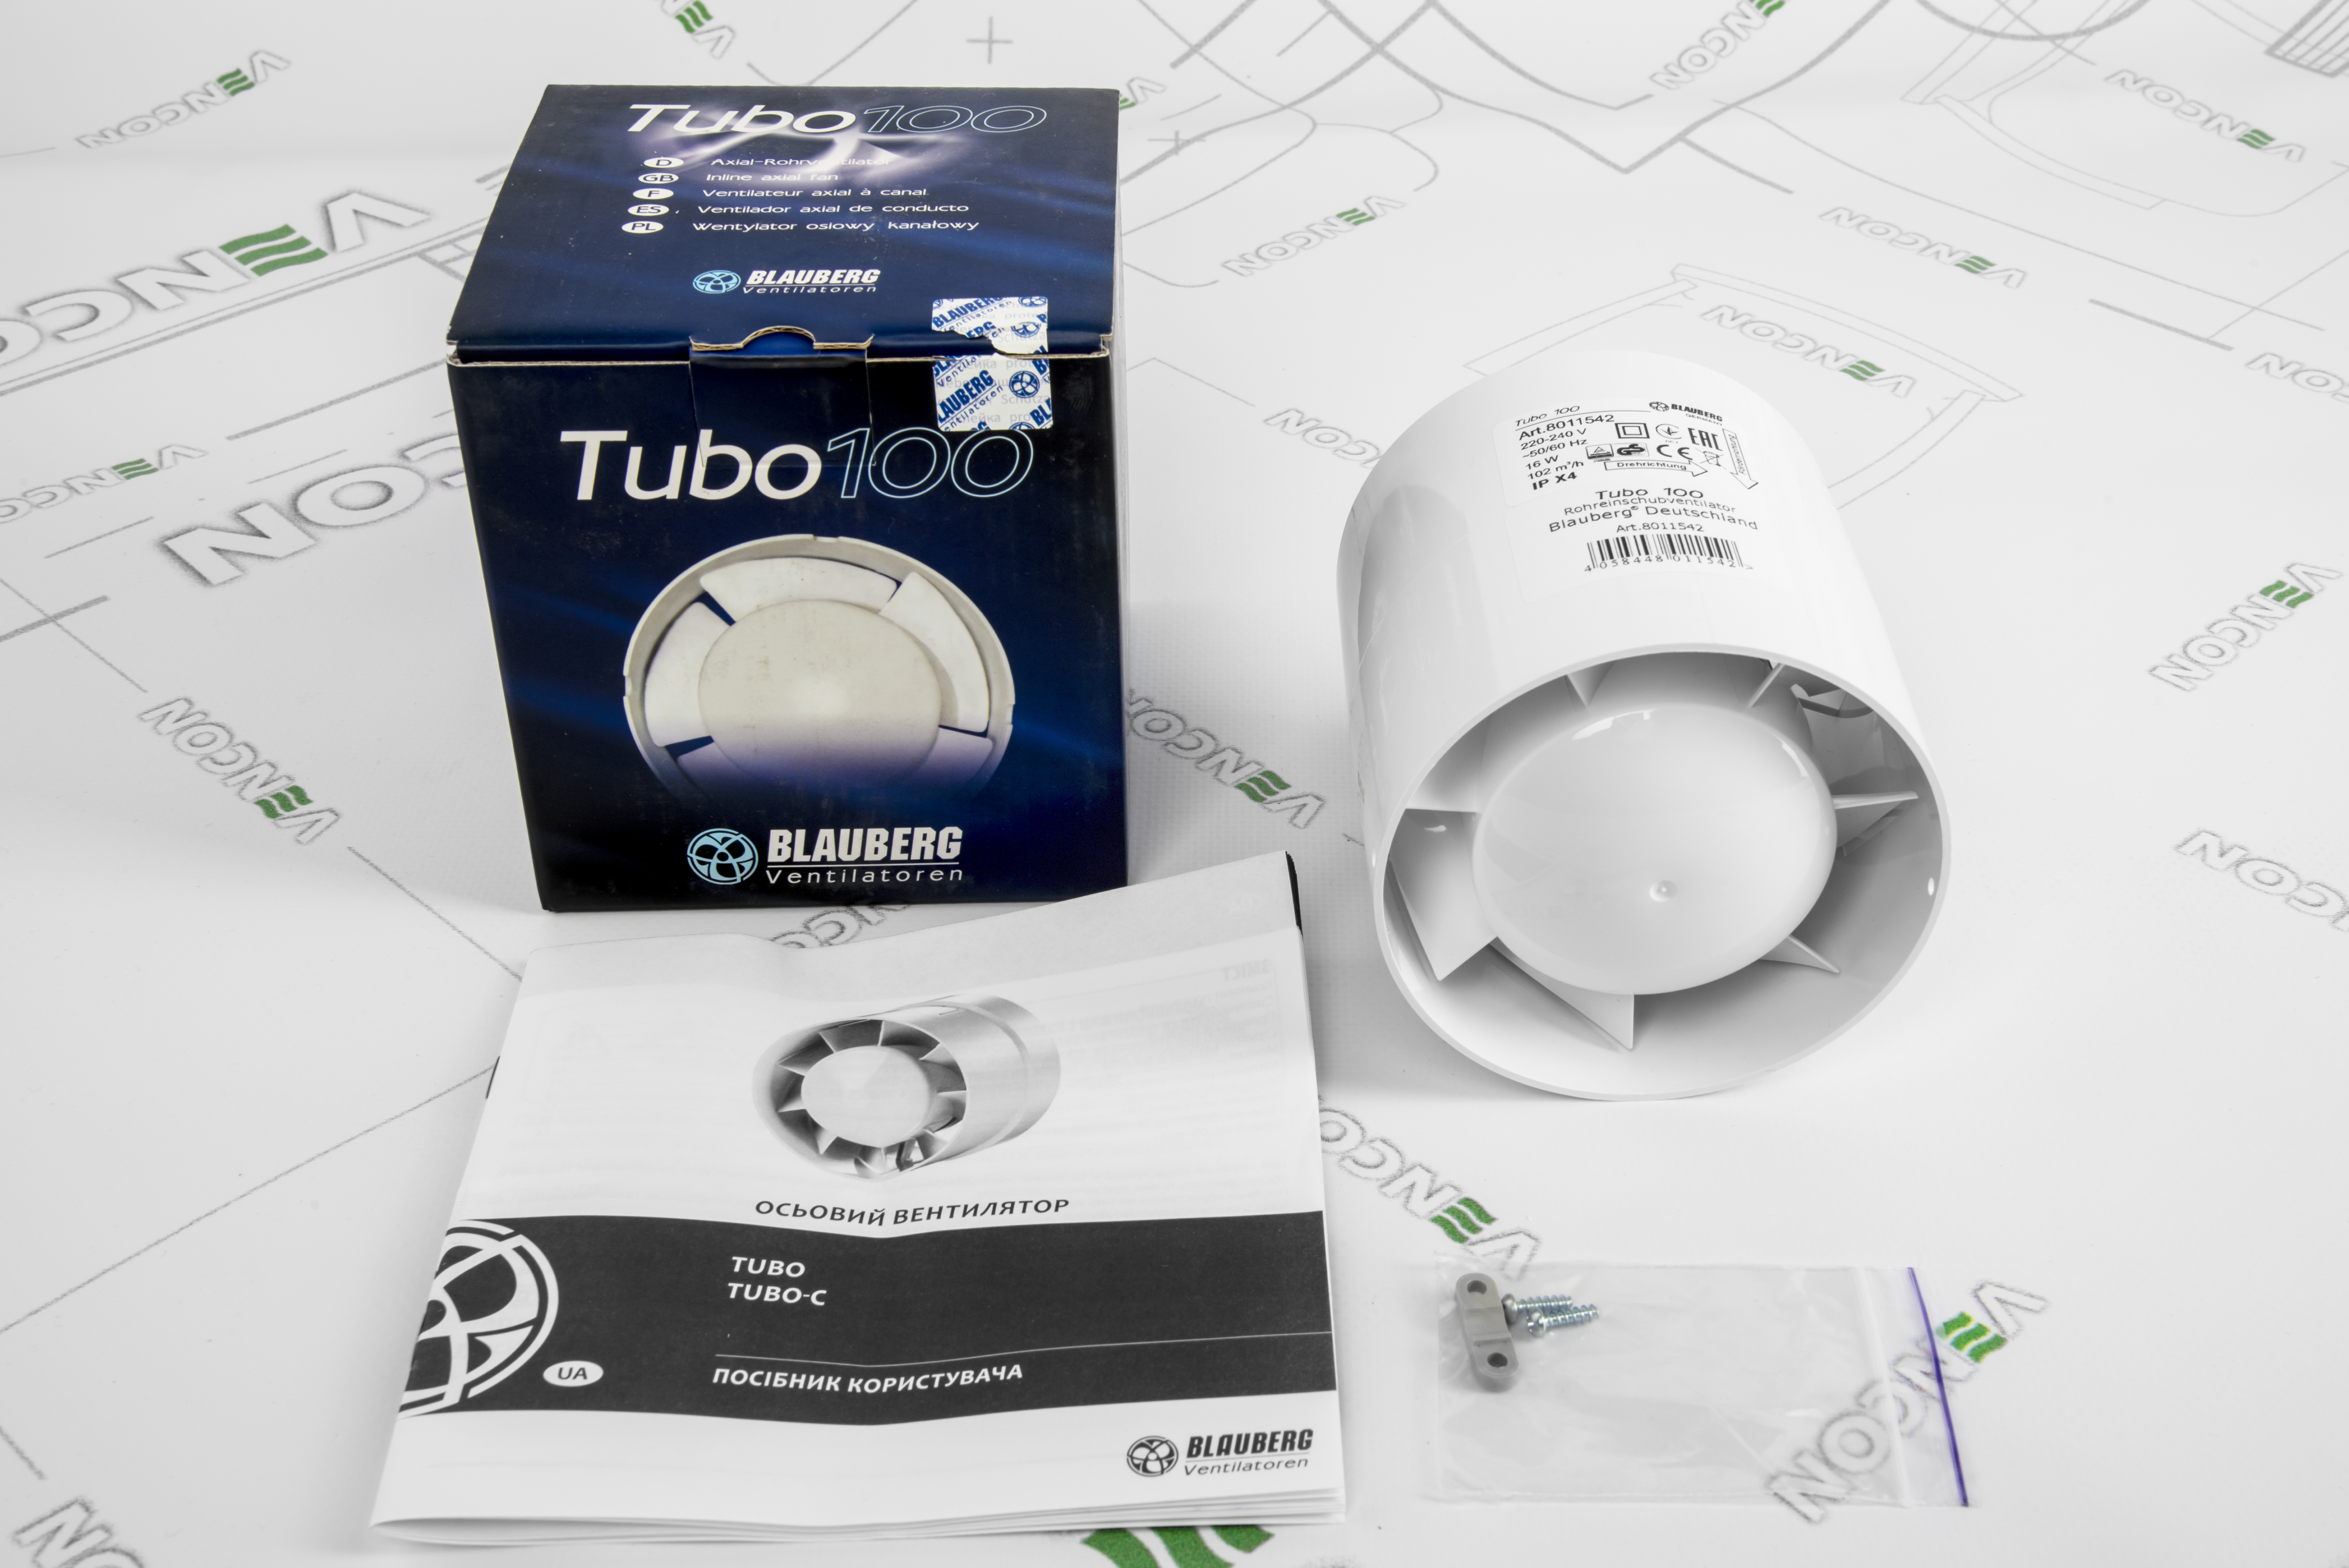 Канальный вентилятор Blauberg Tubo 100 характеристики - фотография 7